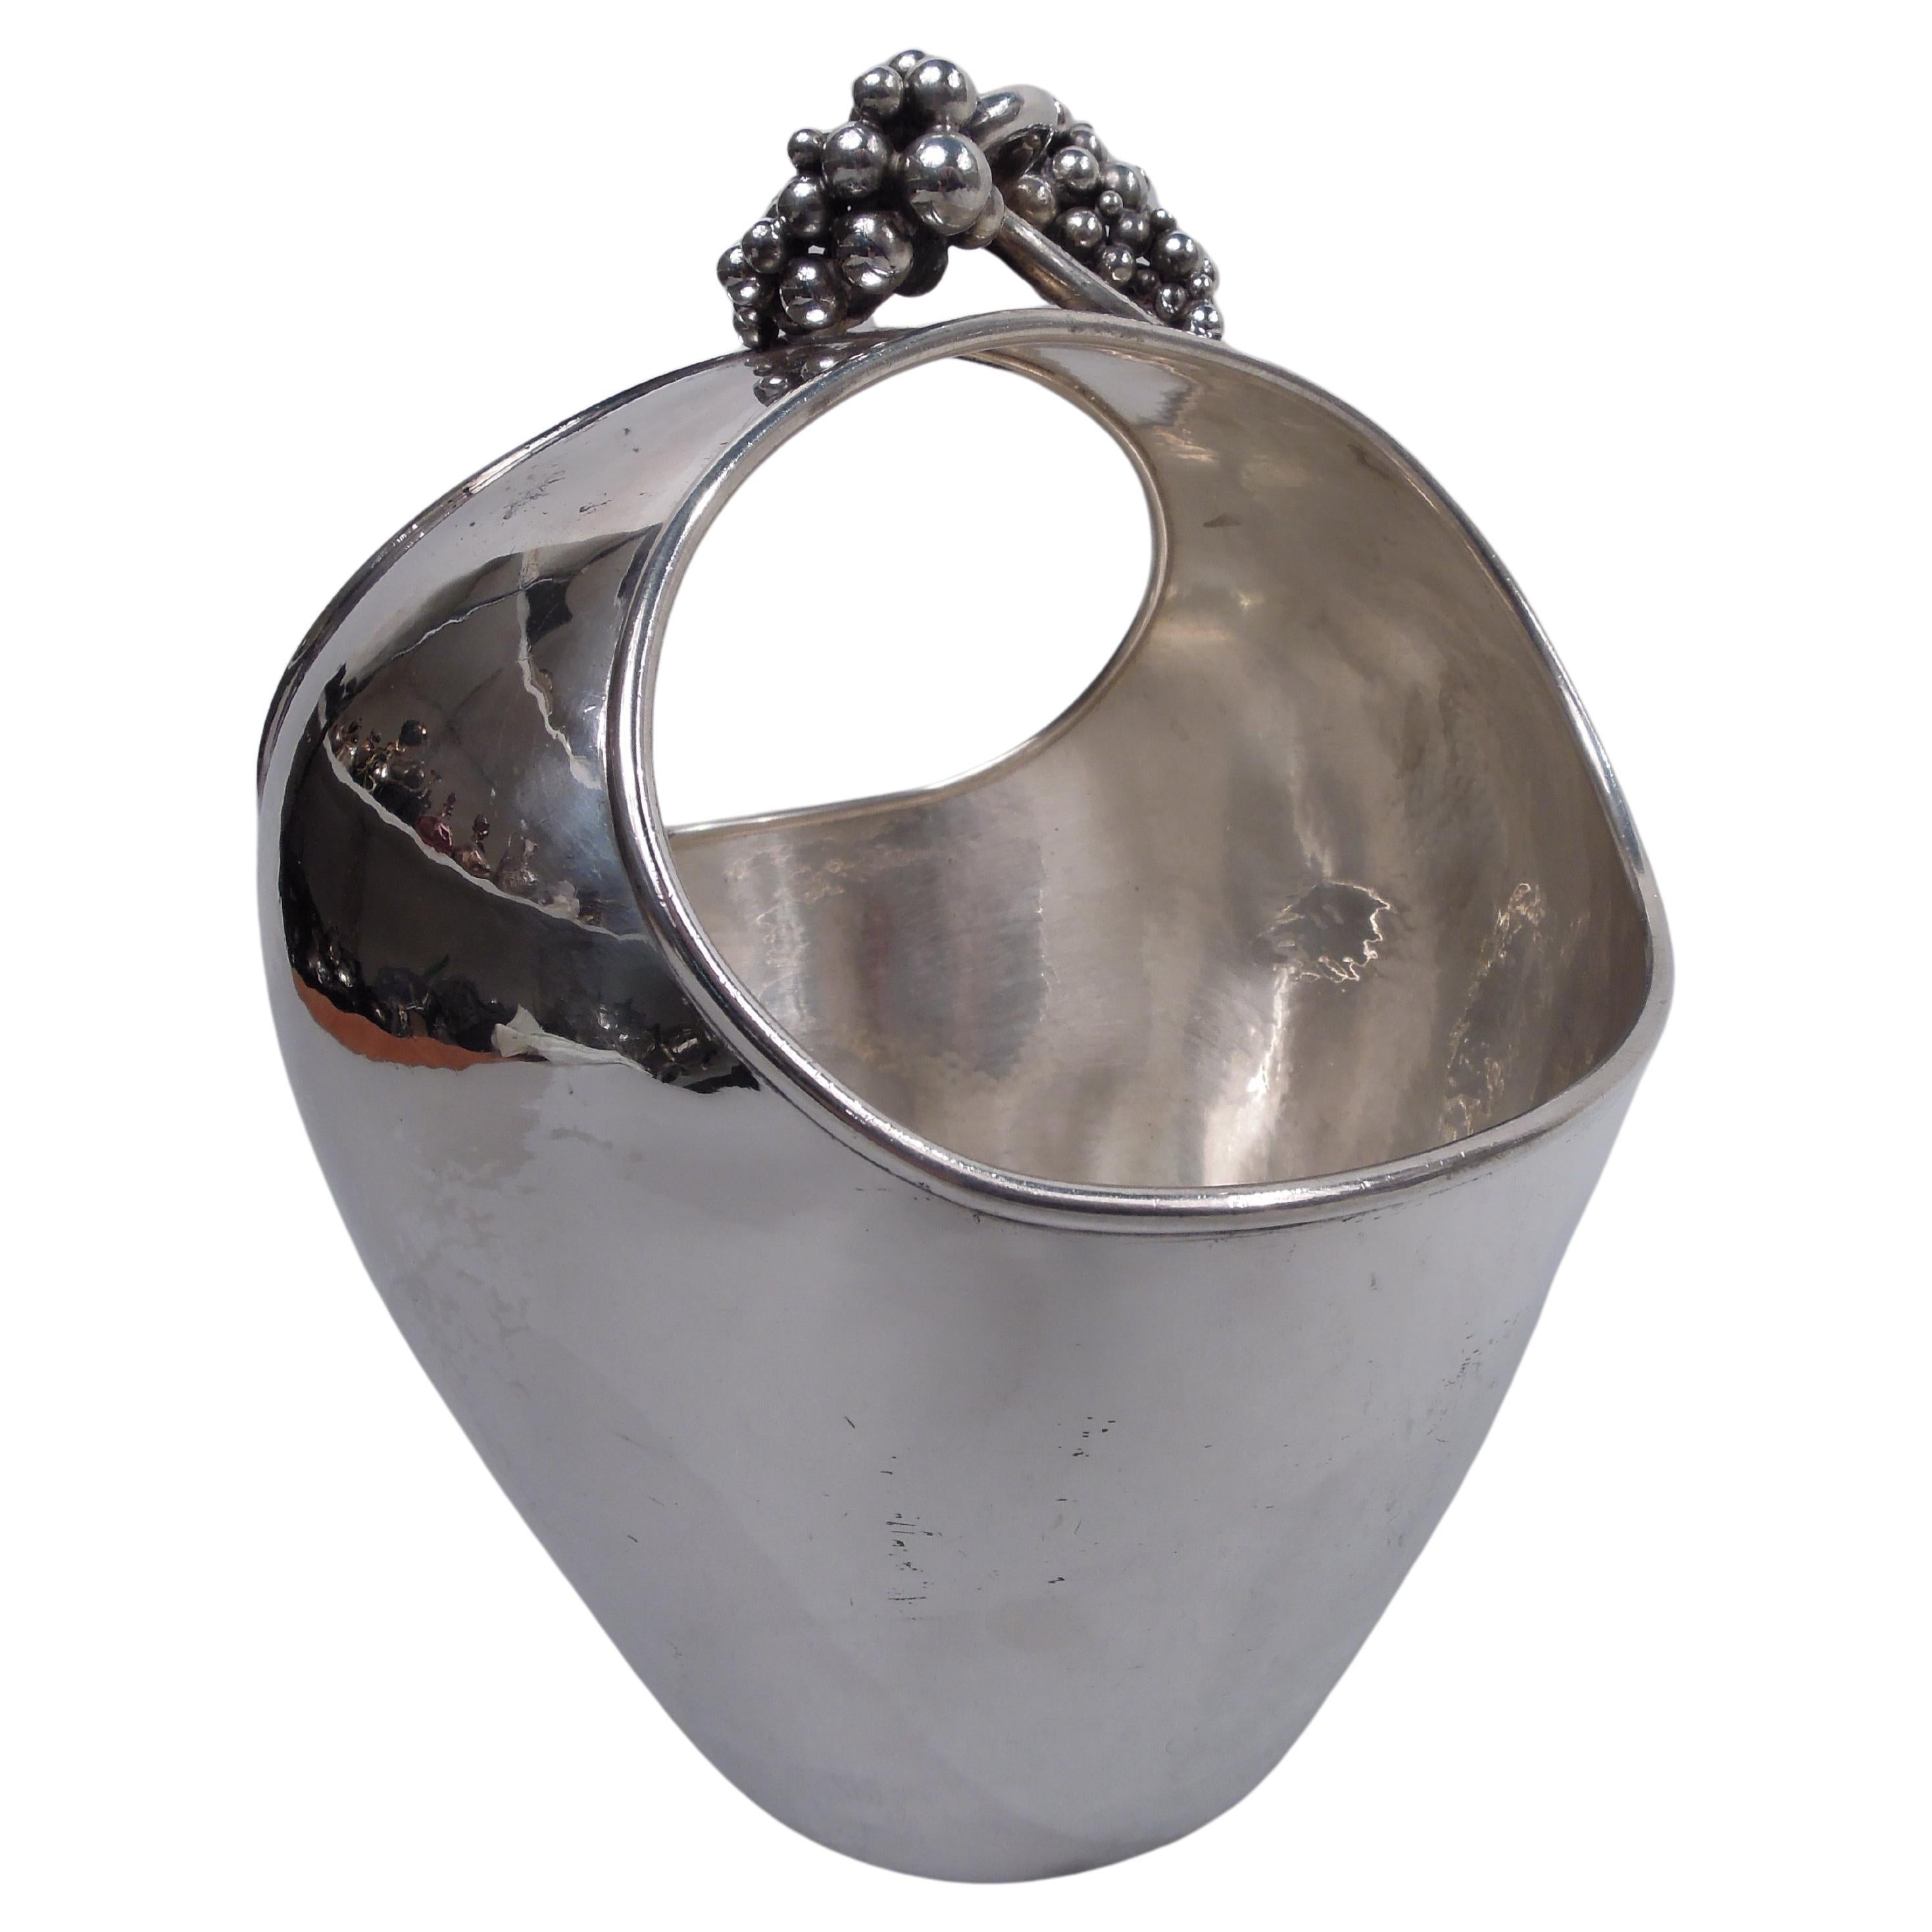 Danish Modern Jensen-Inspired Sterling Silver Basket